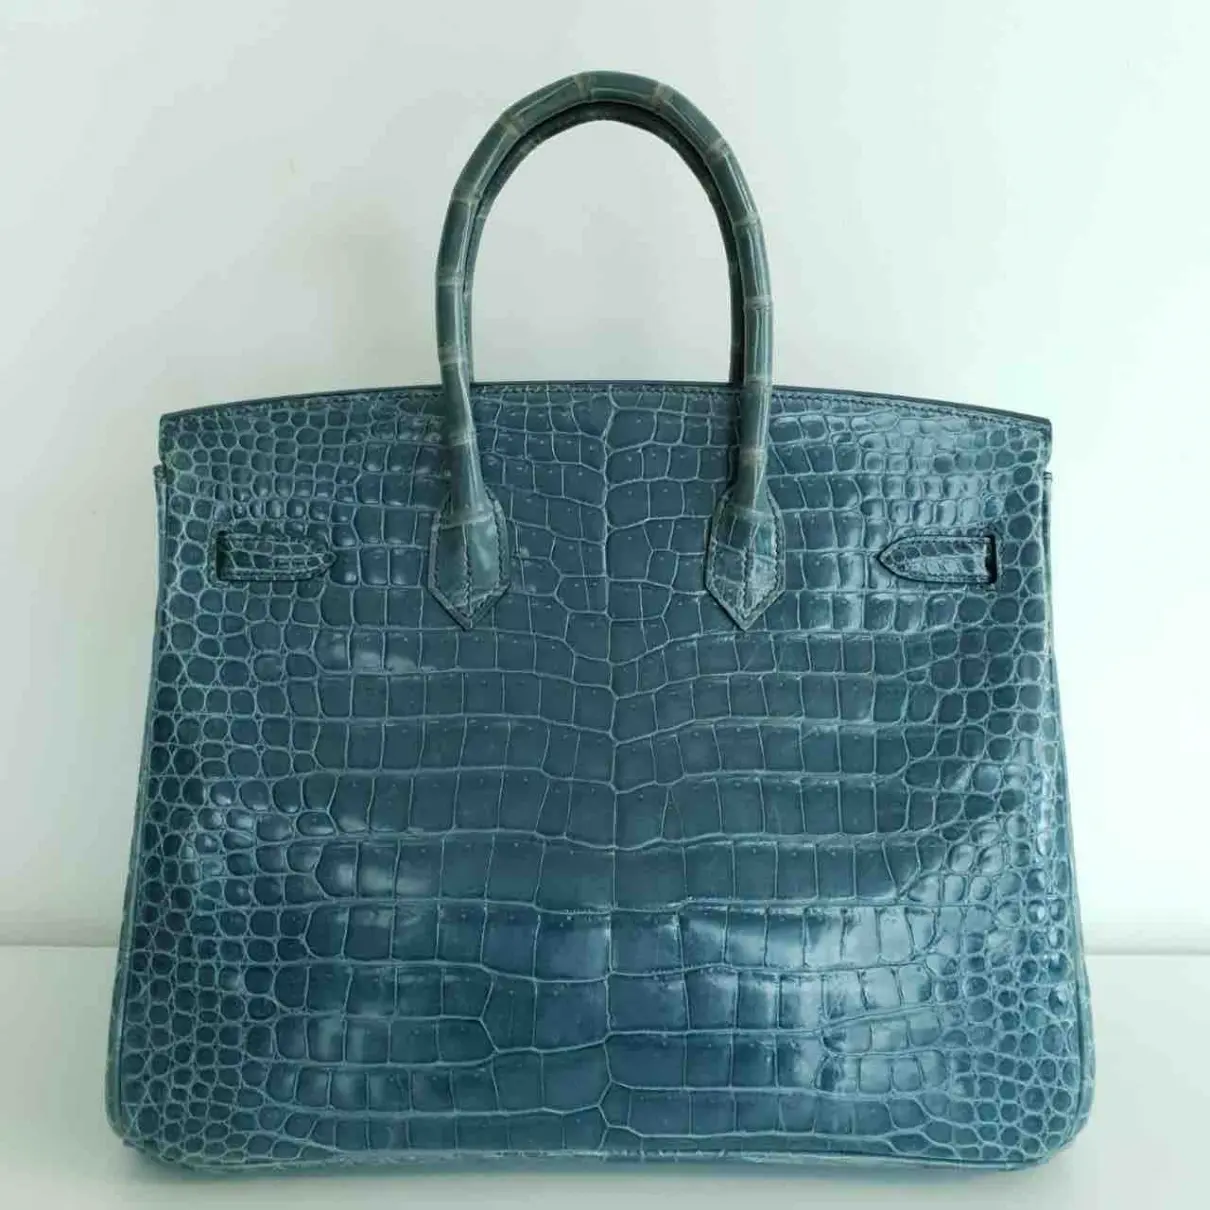 Hermès Birkin 35 crocodile handbag for sale